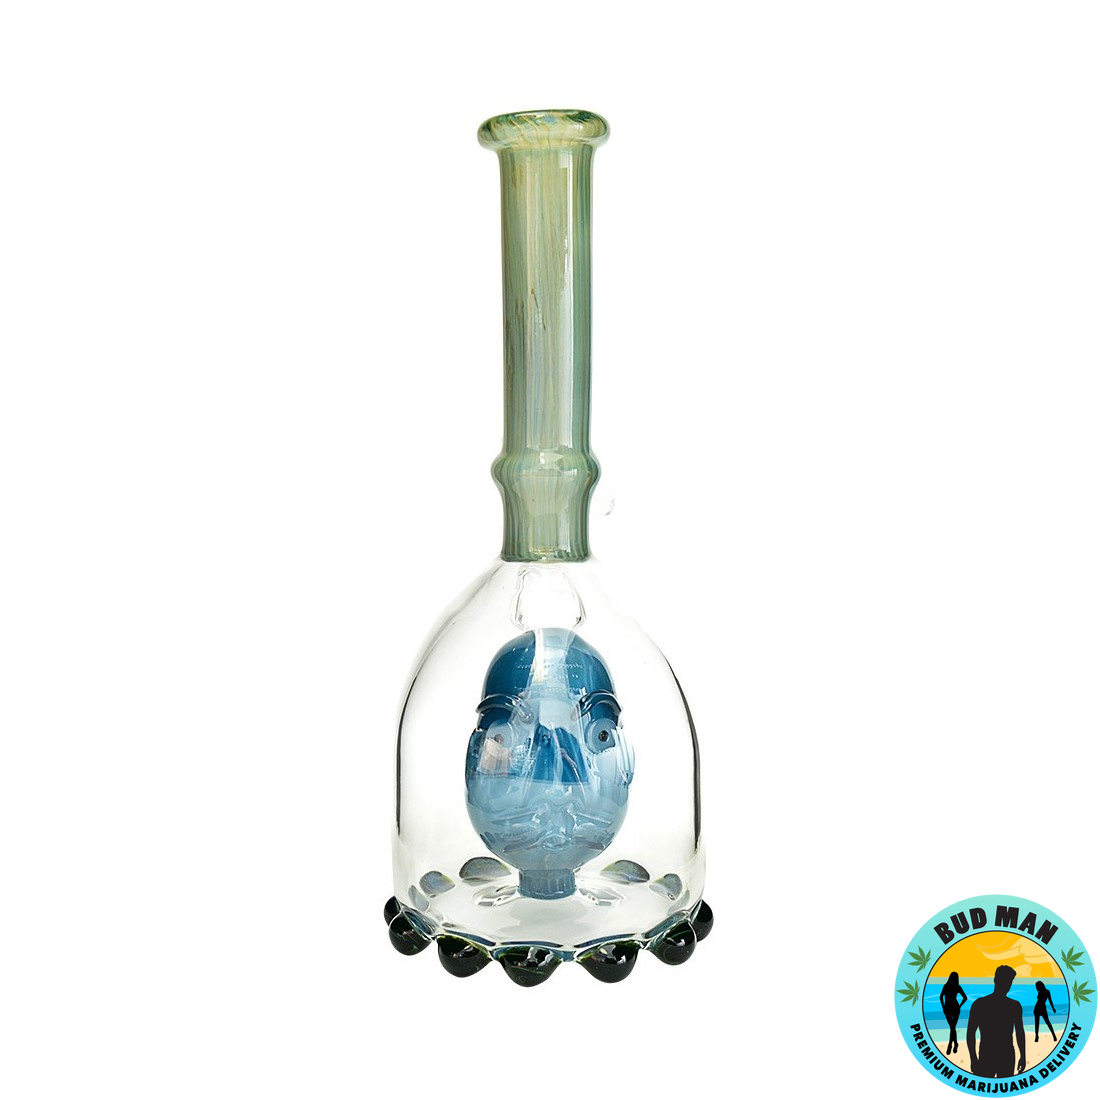 https://budmanoc.com/wp-content/uploads/2016/08/Menu-Misc-Scientific-Shrunken-Head-Water-Pipe-9.5-inches-Glass-Bud-Man-Premium-Medical-Marijuana-Delivery-in-O.jpg